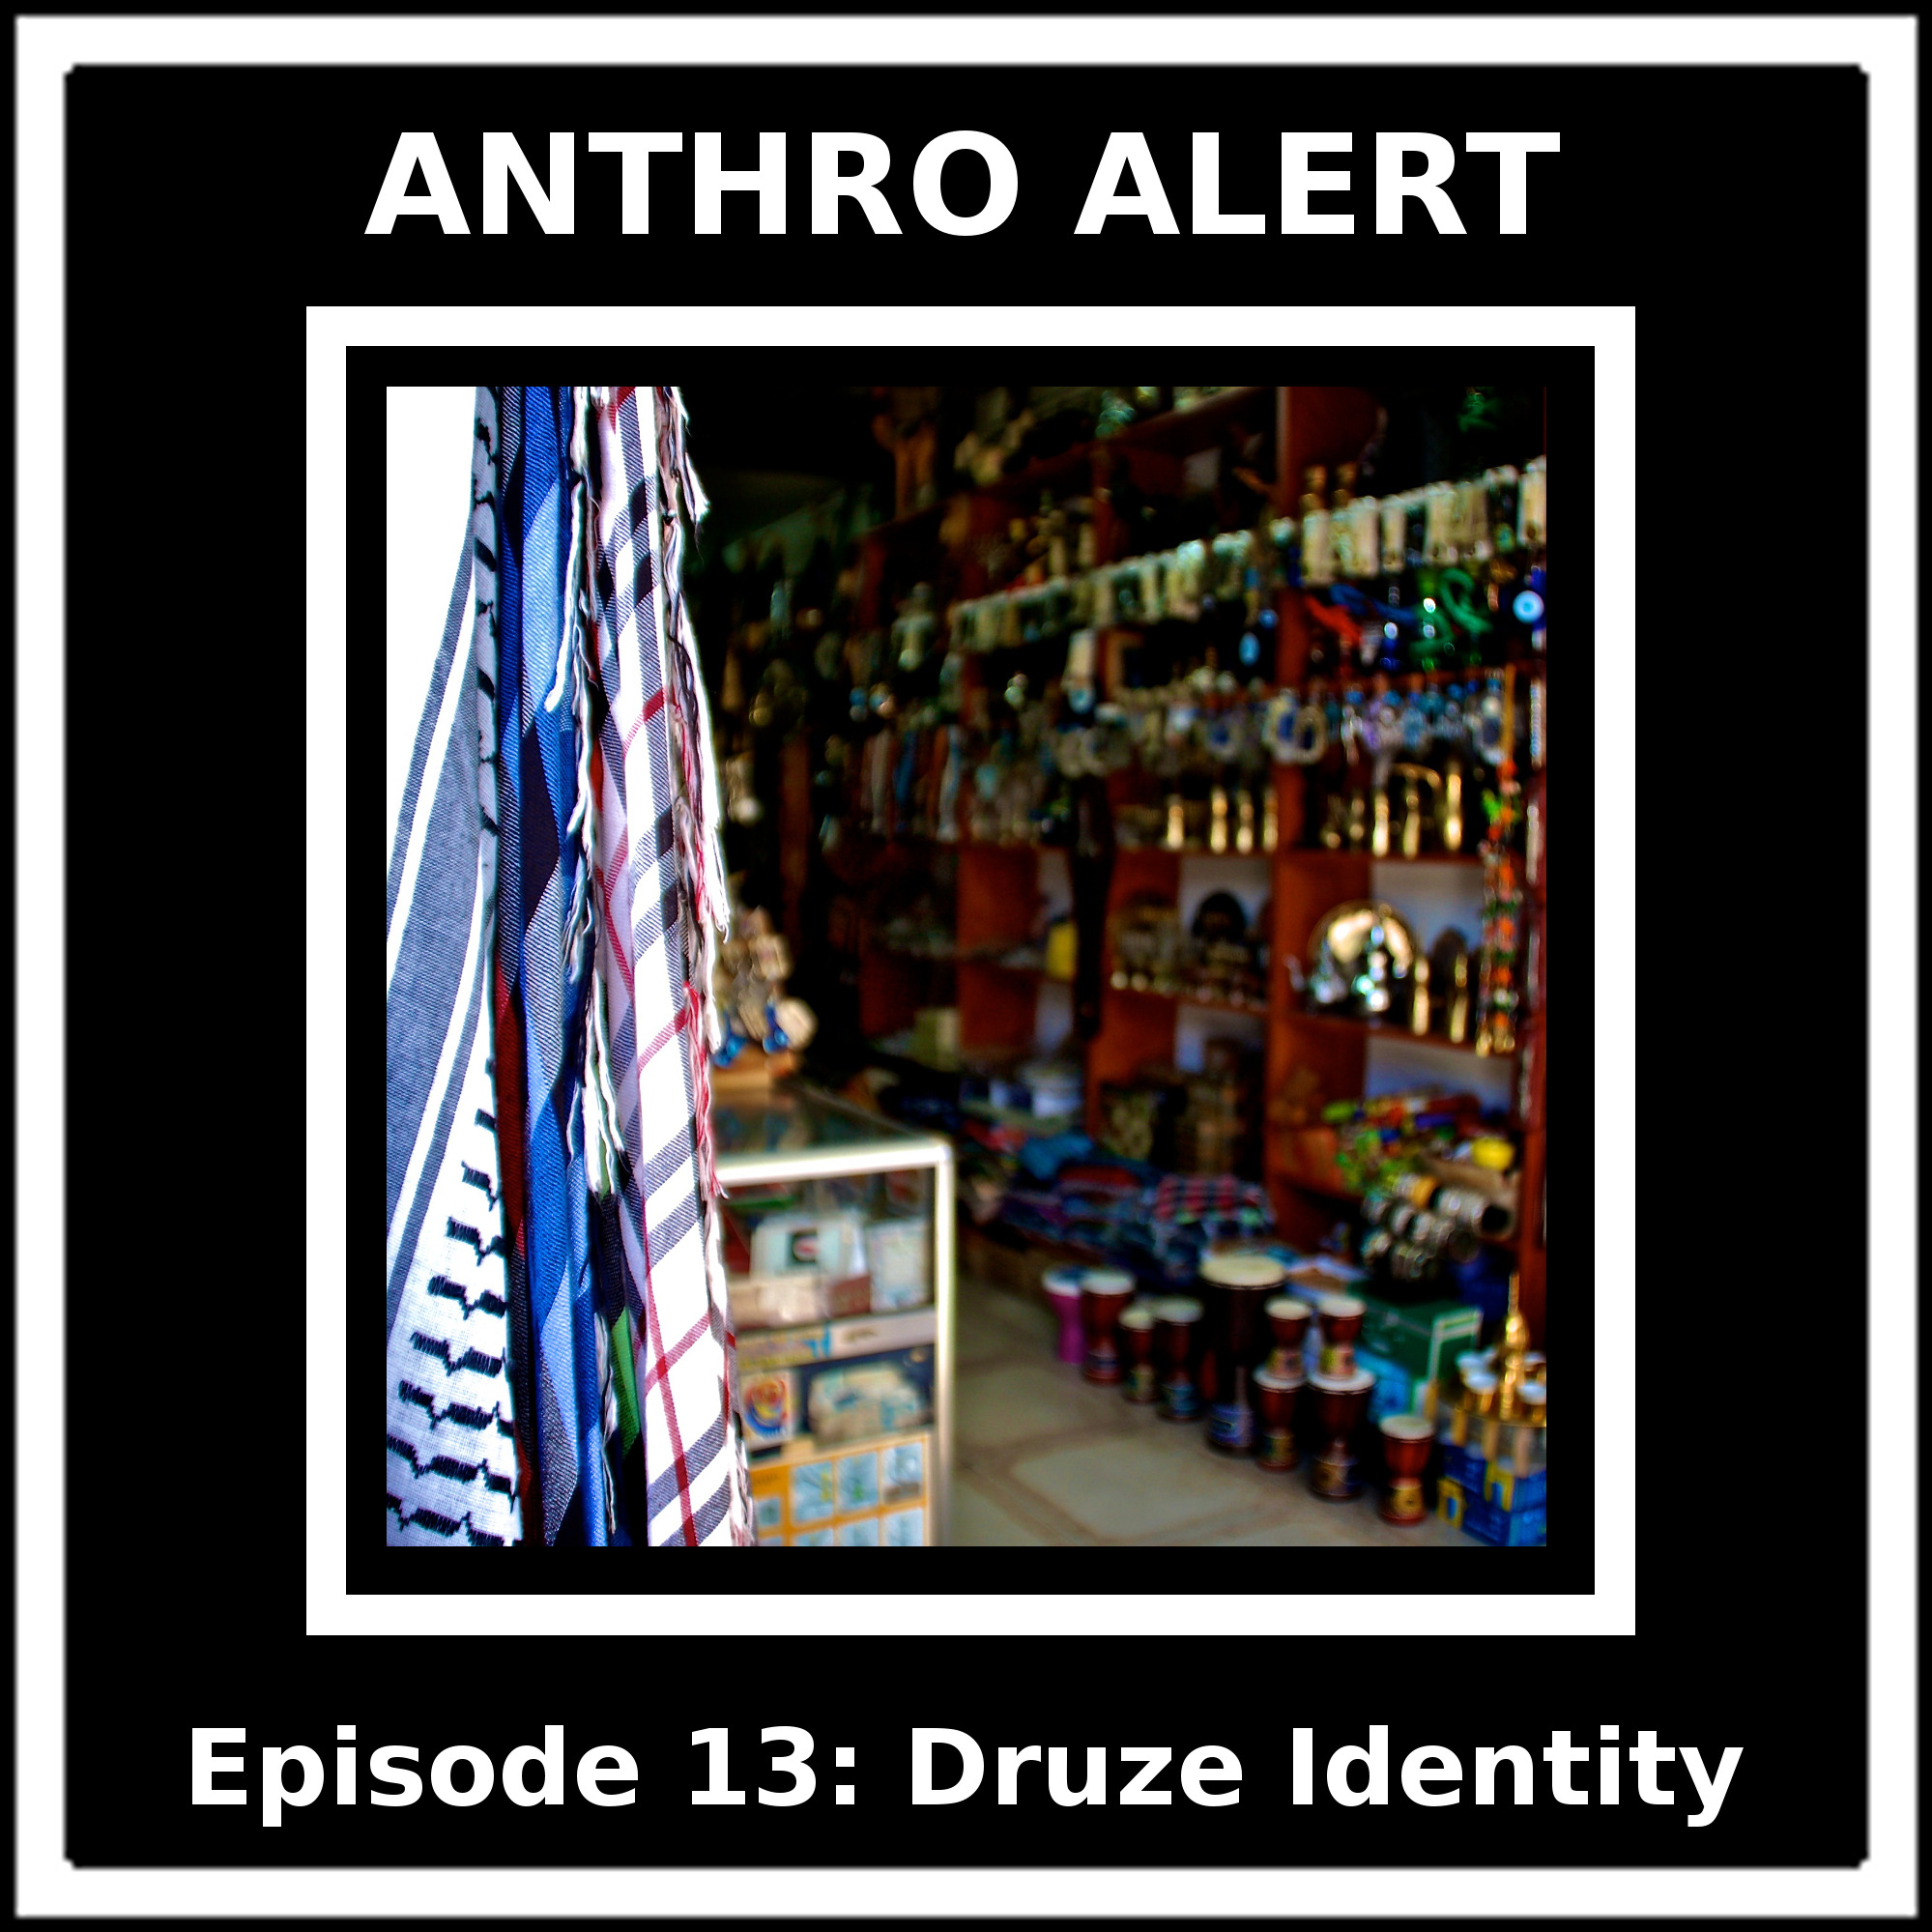 Episode 13: Druze Identity